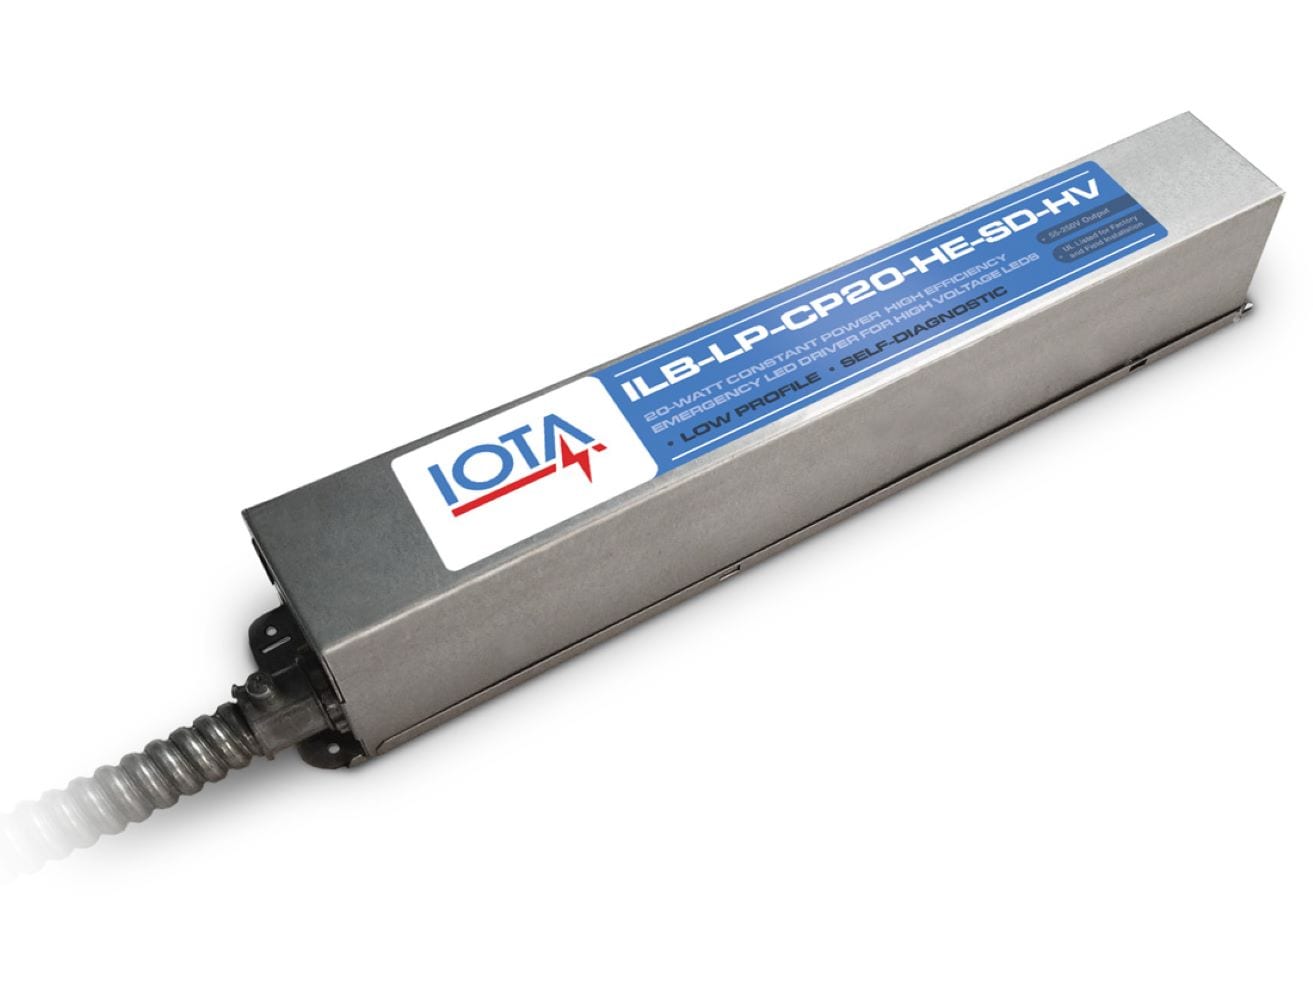 IOTA Lithium Ion (li-ion) Emergency Lighting Battery Pack in the 